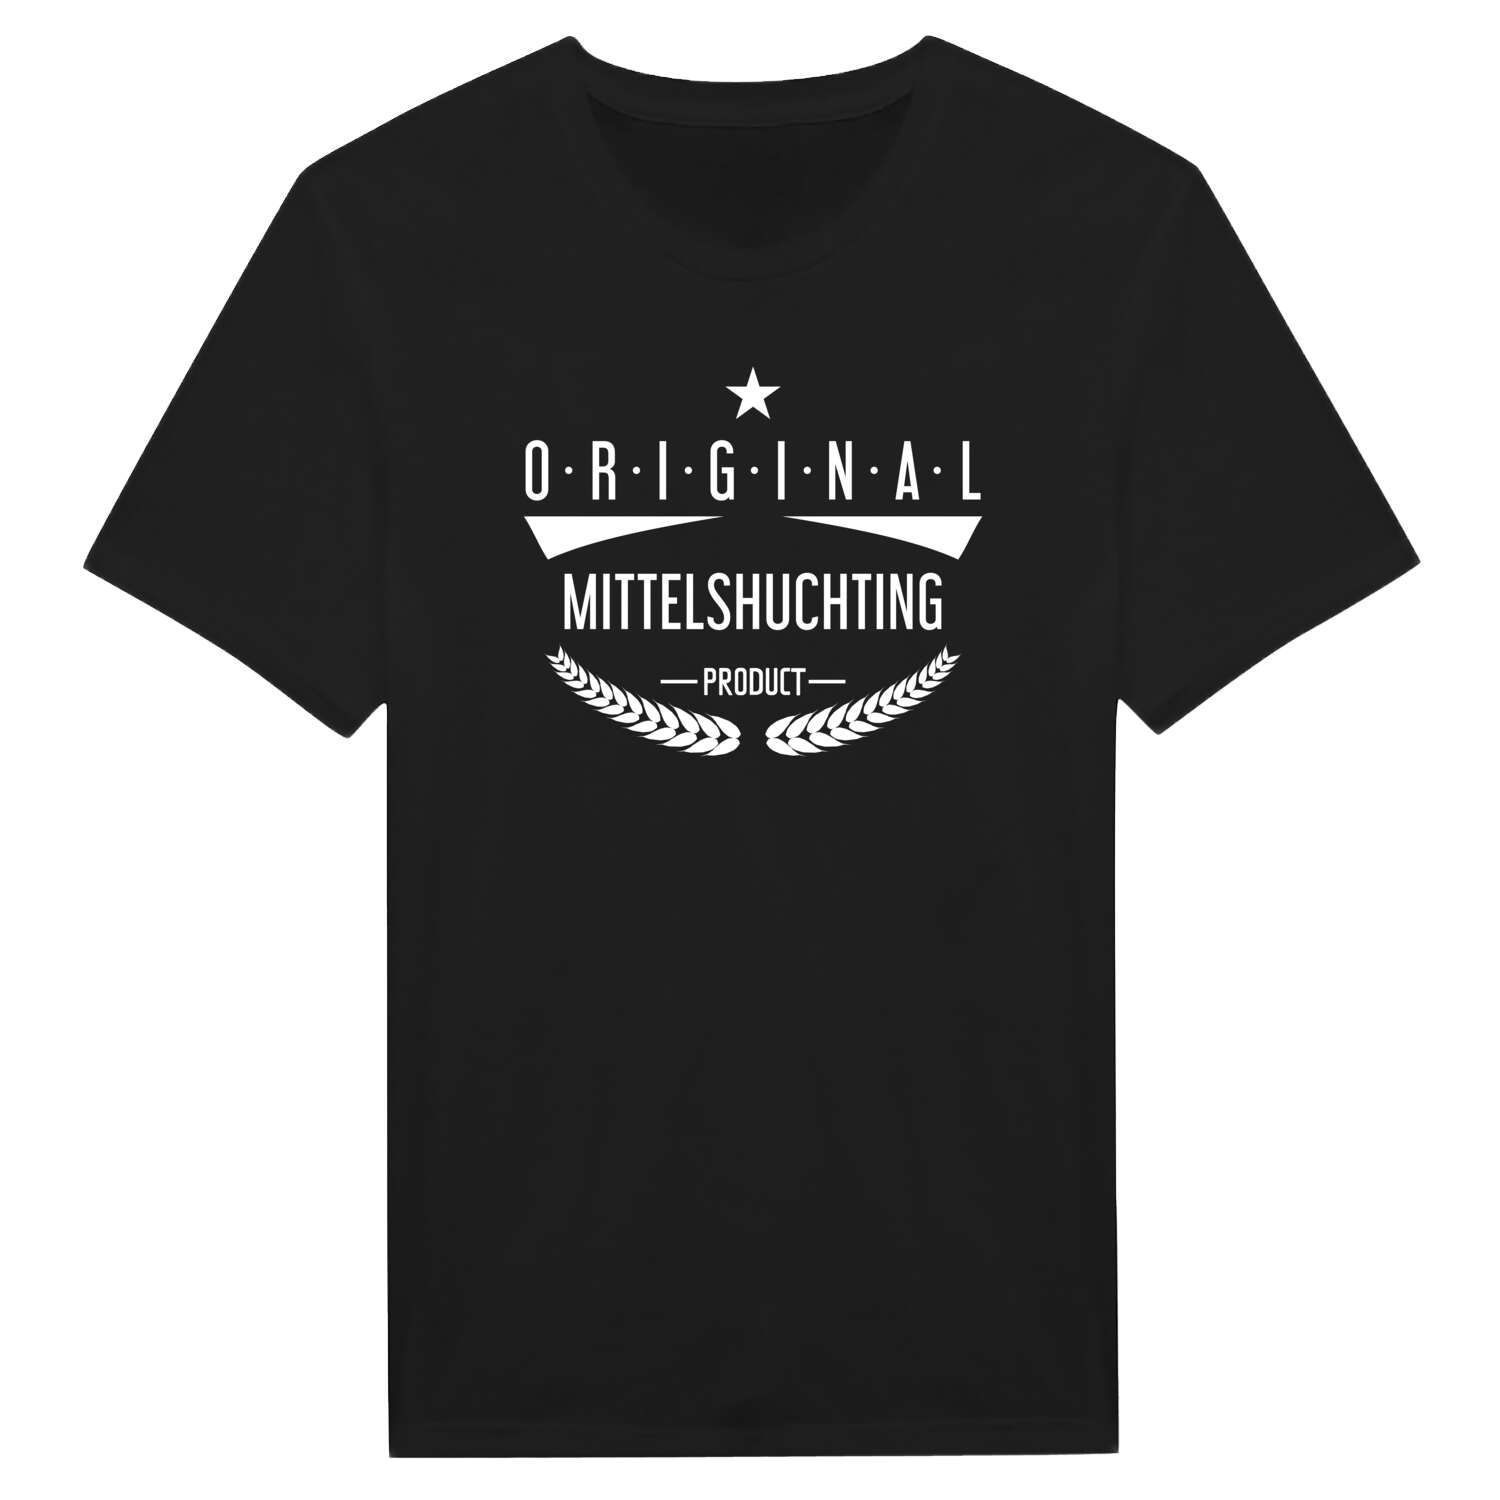 Mittelshuchting T-Shirt »Original Product«